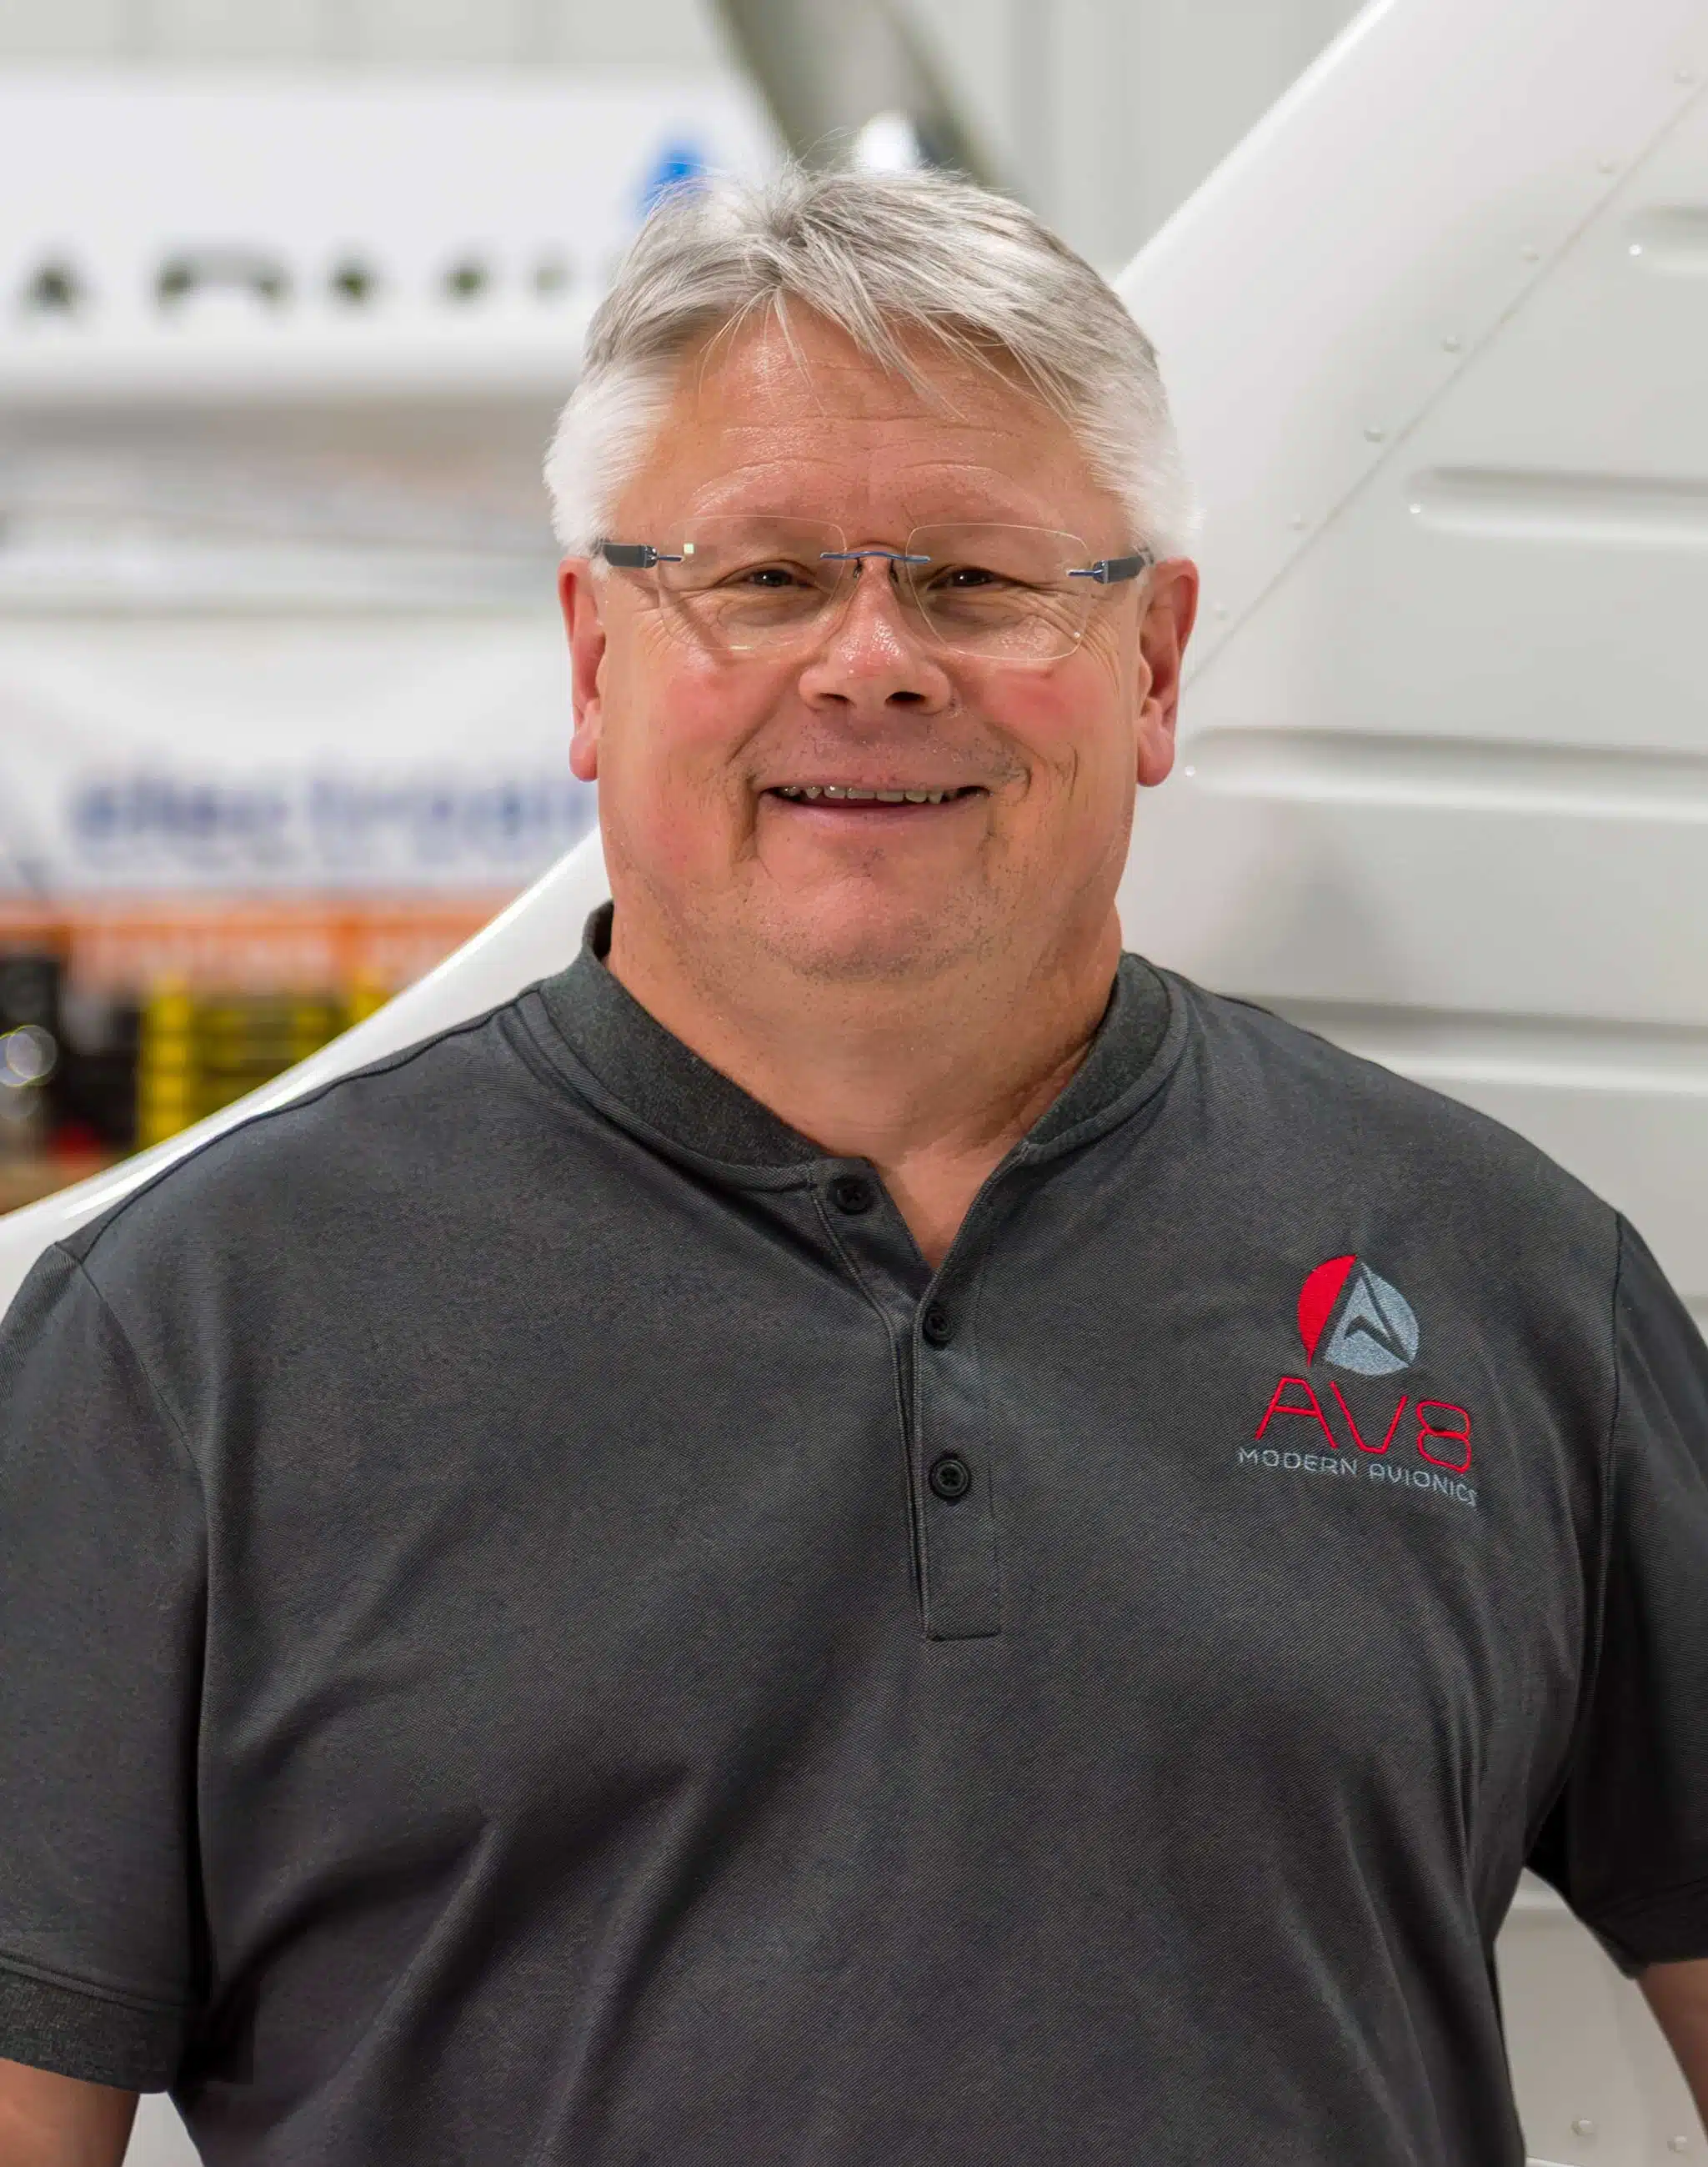 Jerry Lindquist, Avionics Manager, AV8 Modern Avionics